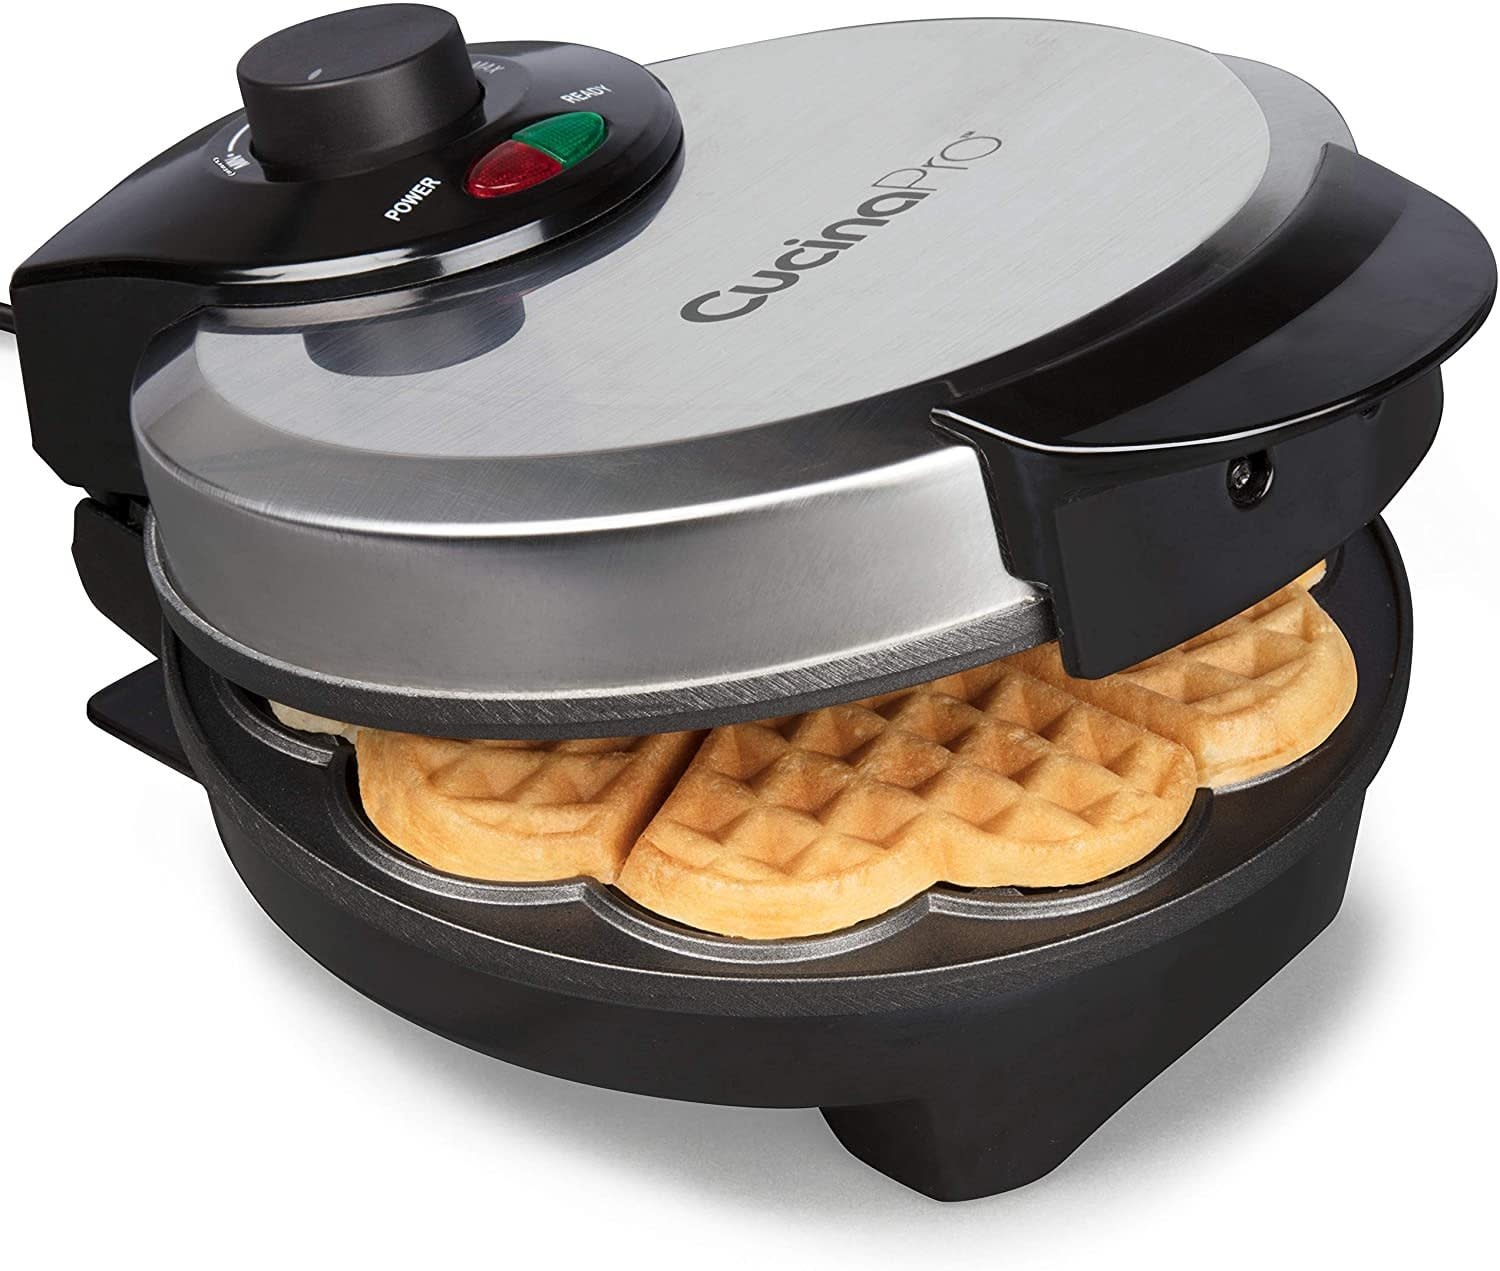 Cucina Pro® Waffle Maker Round